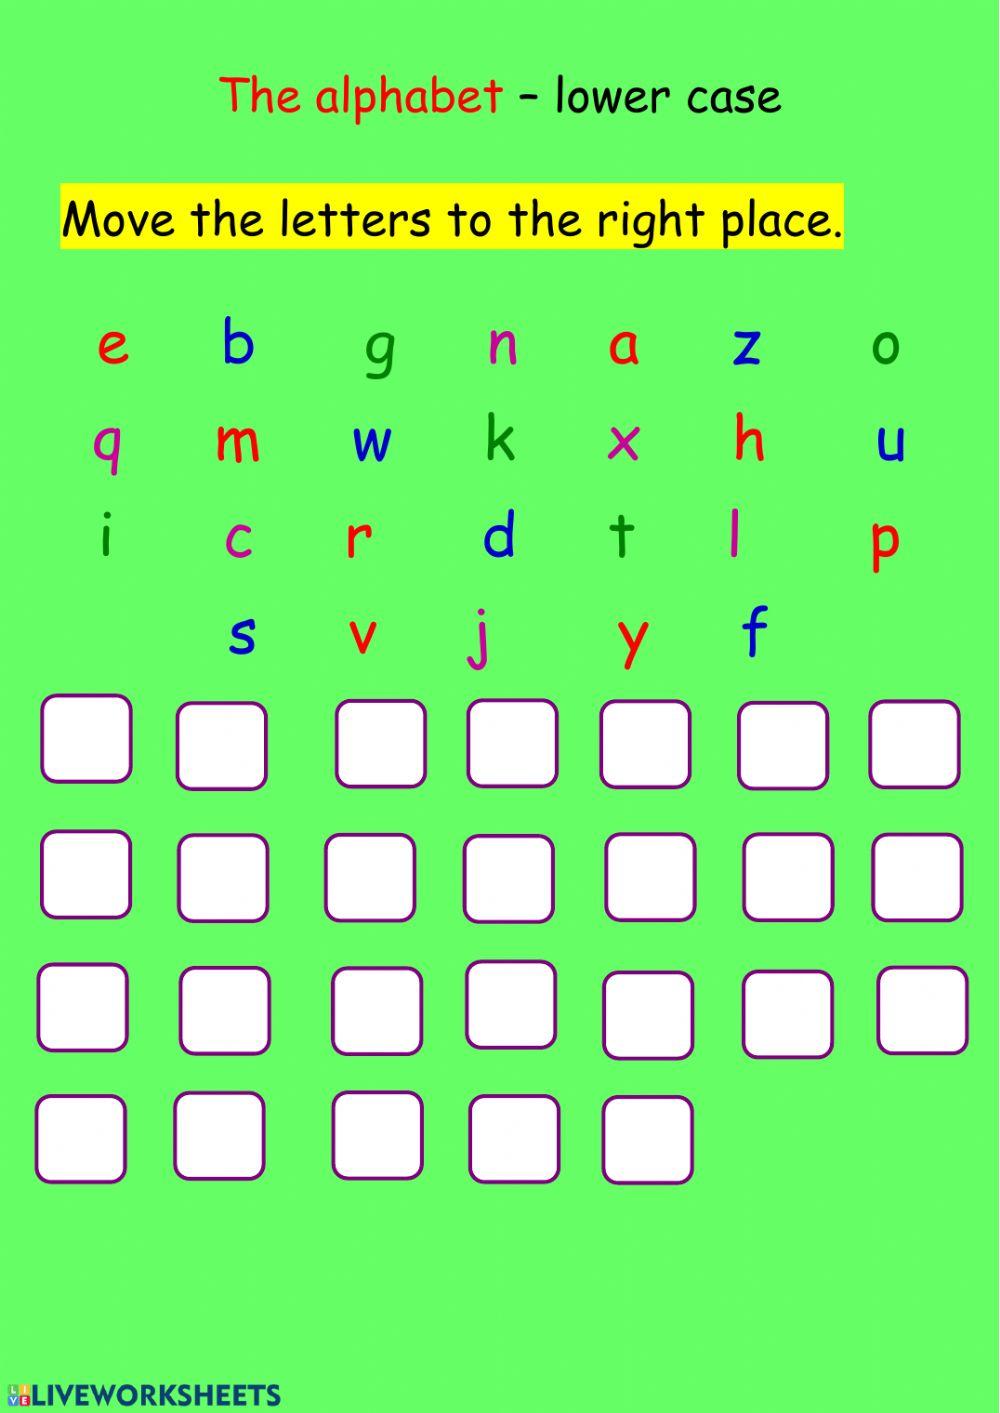 Alphabet sort lower case